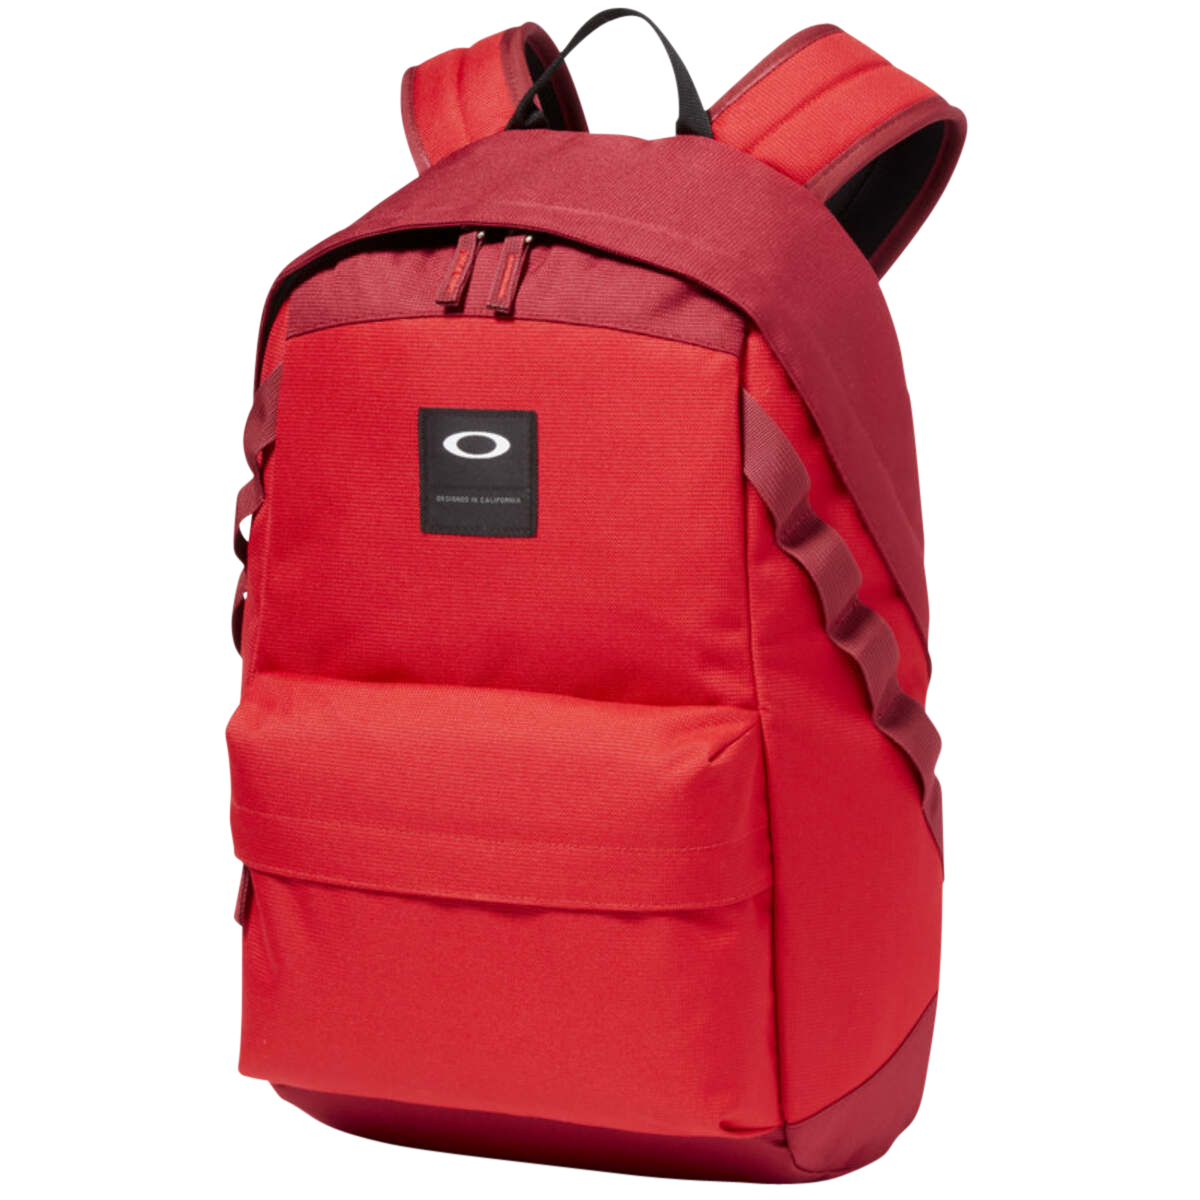 oakley backpack red